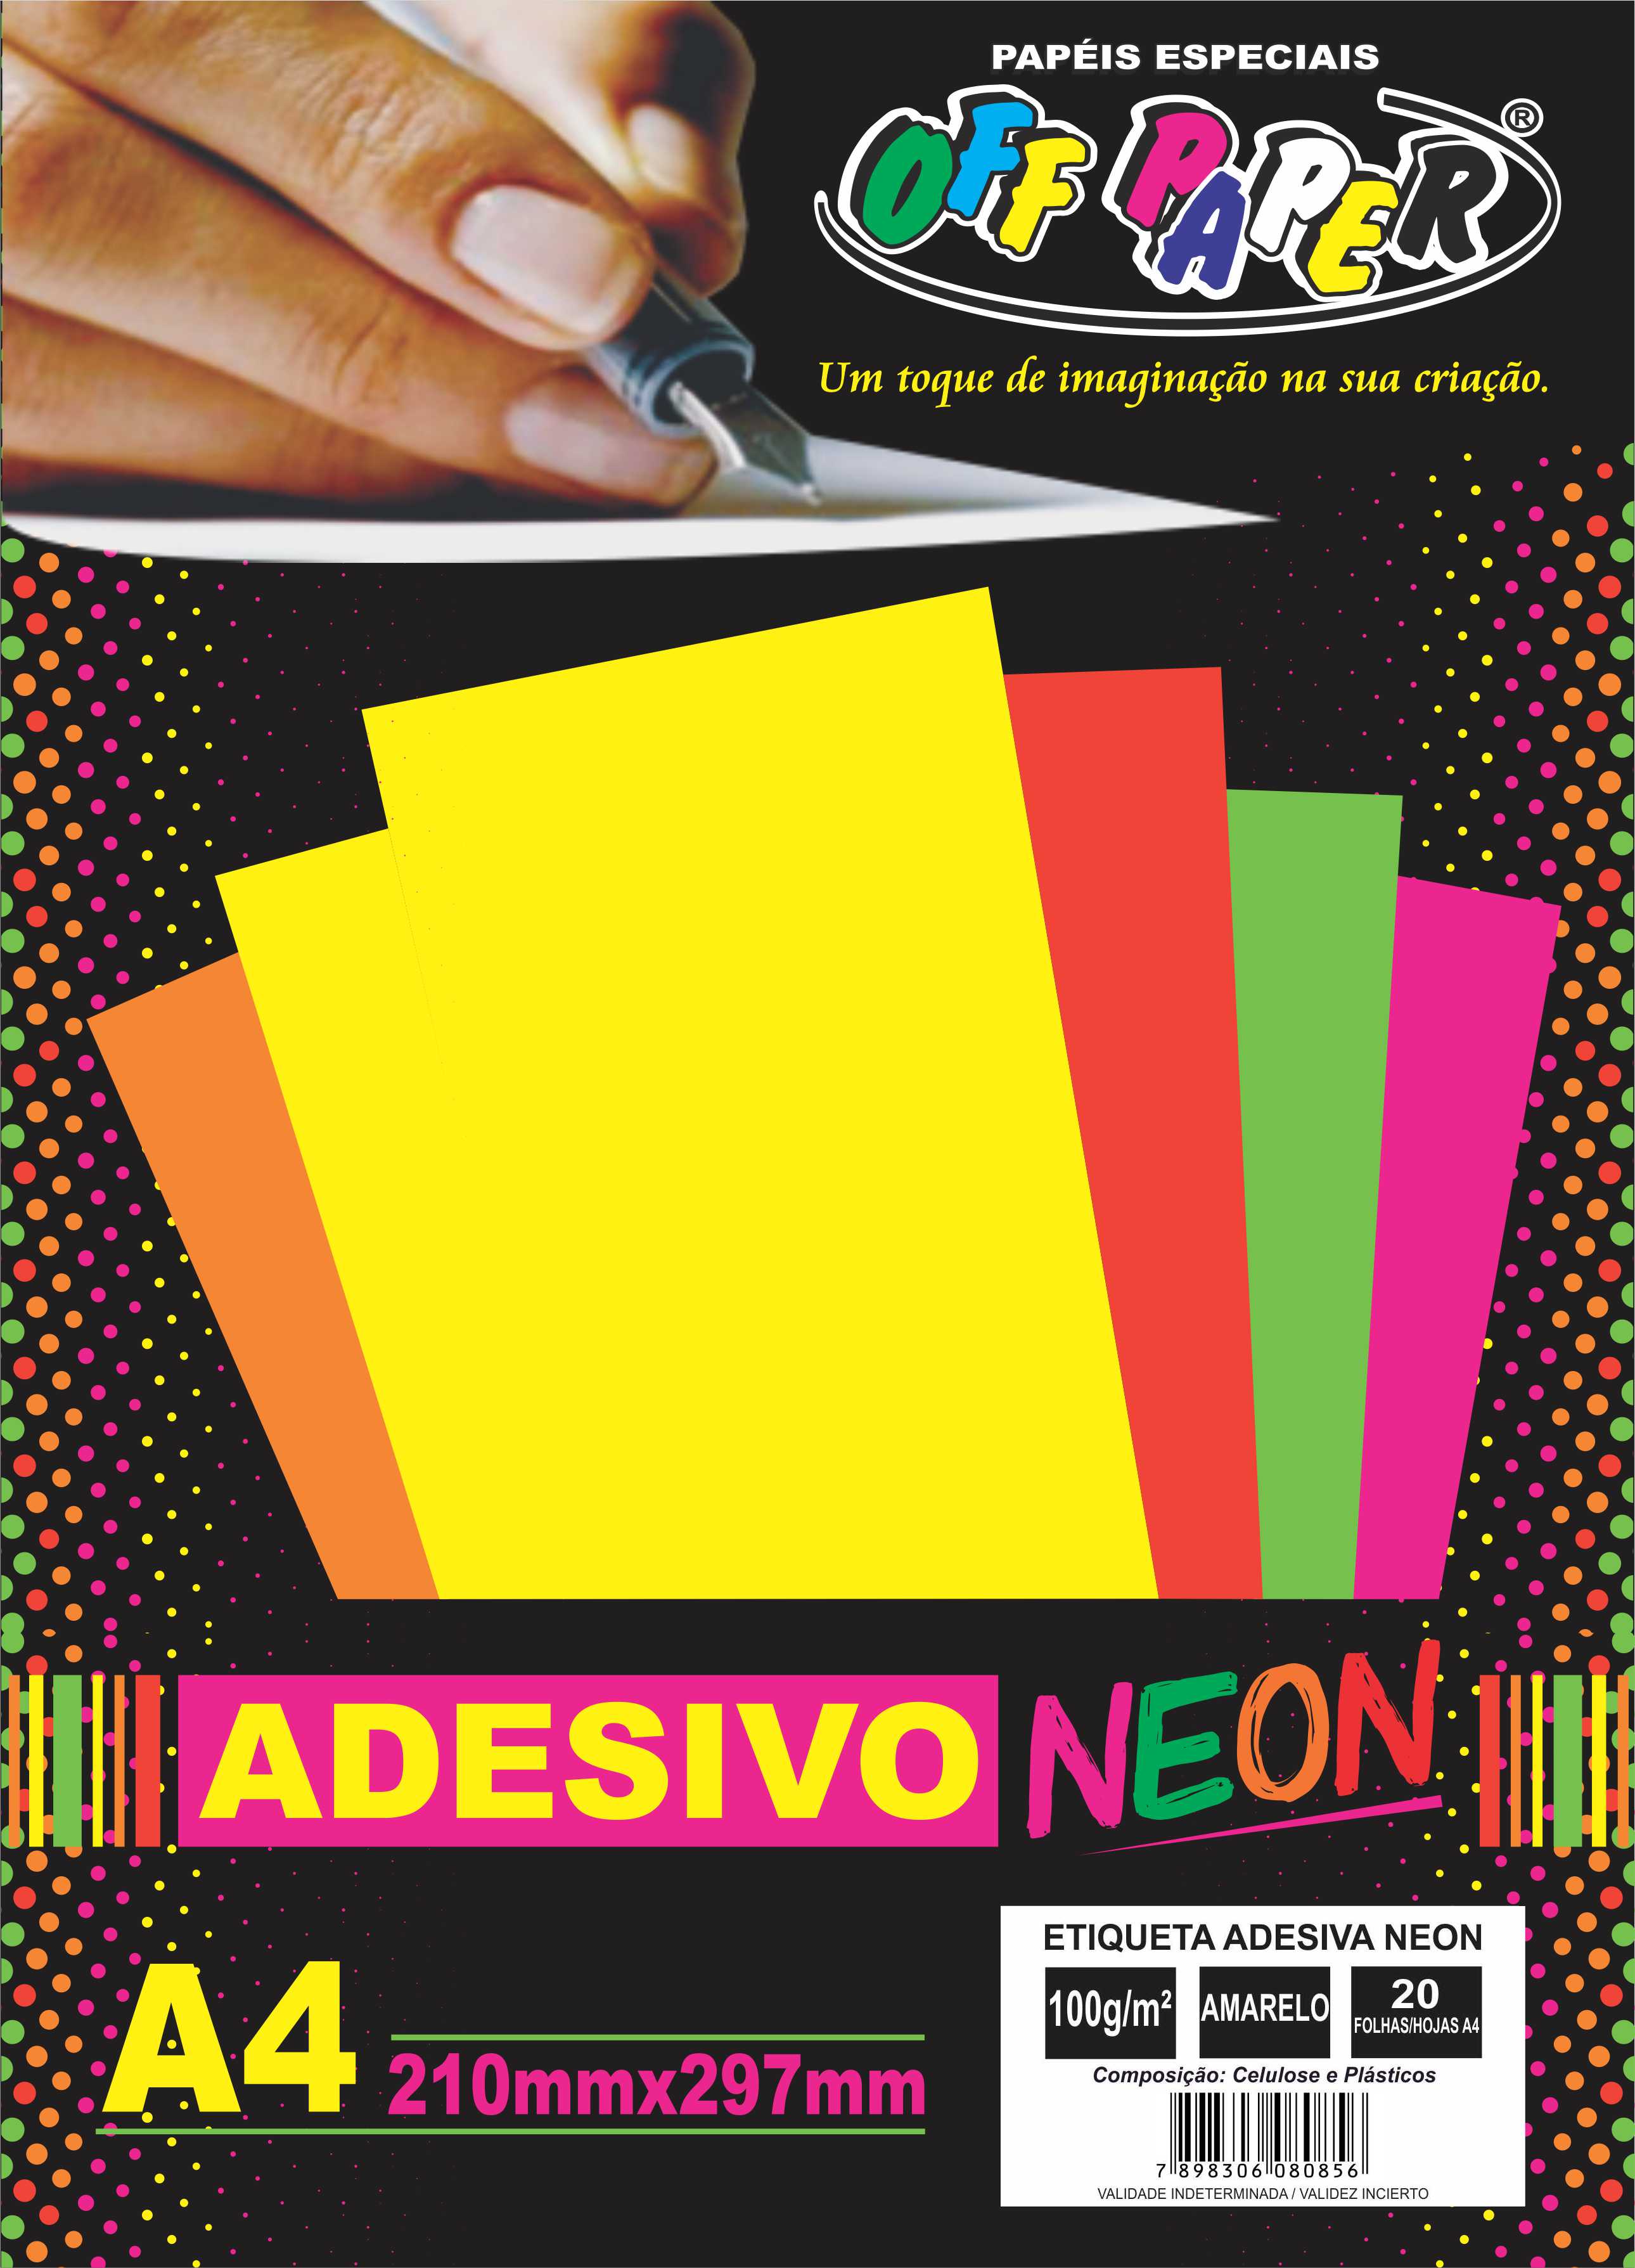 Adesivo Neon - Off Paper - Papéis Especiais